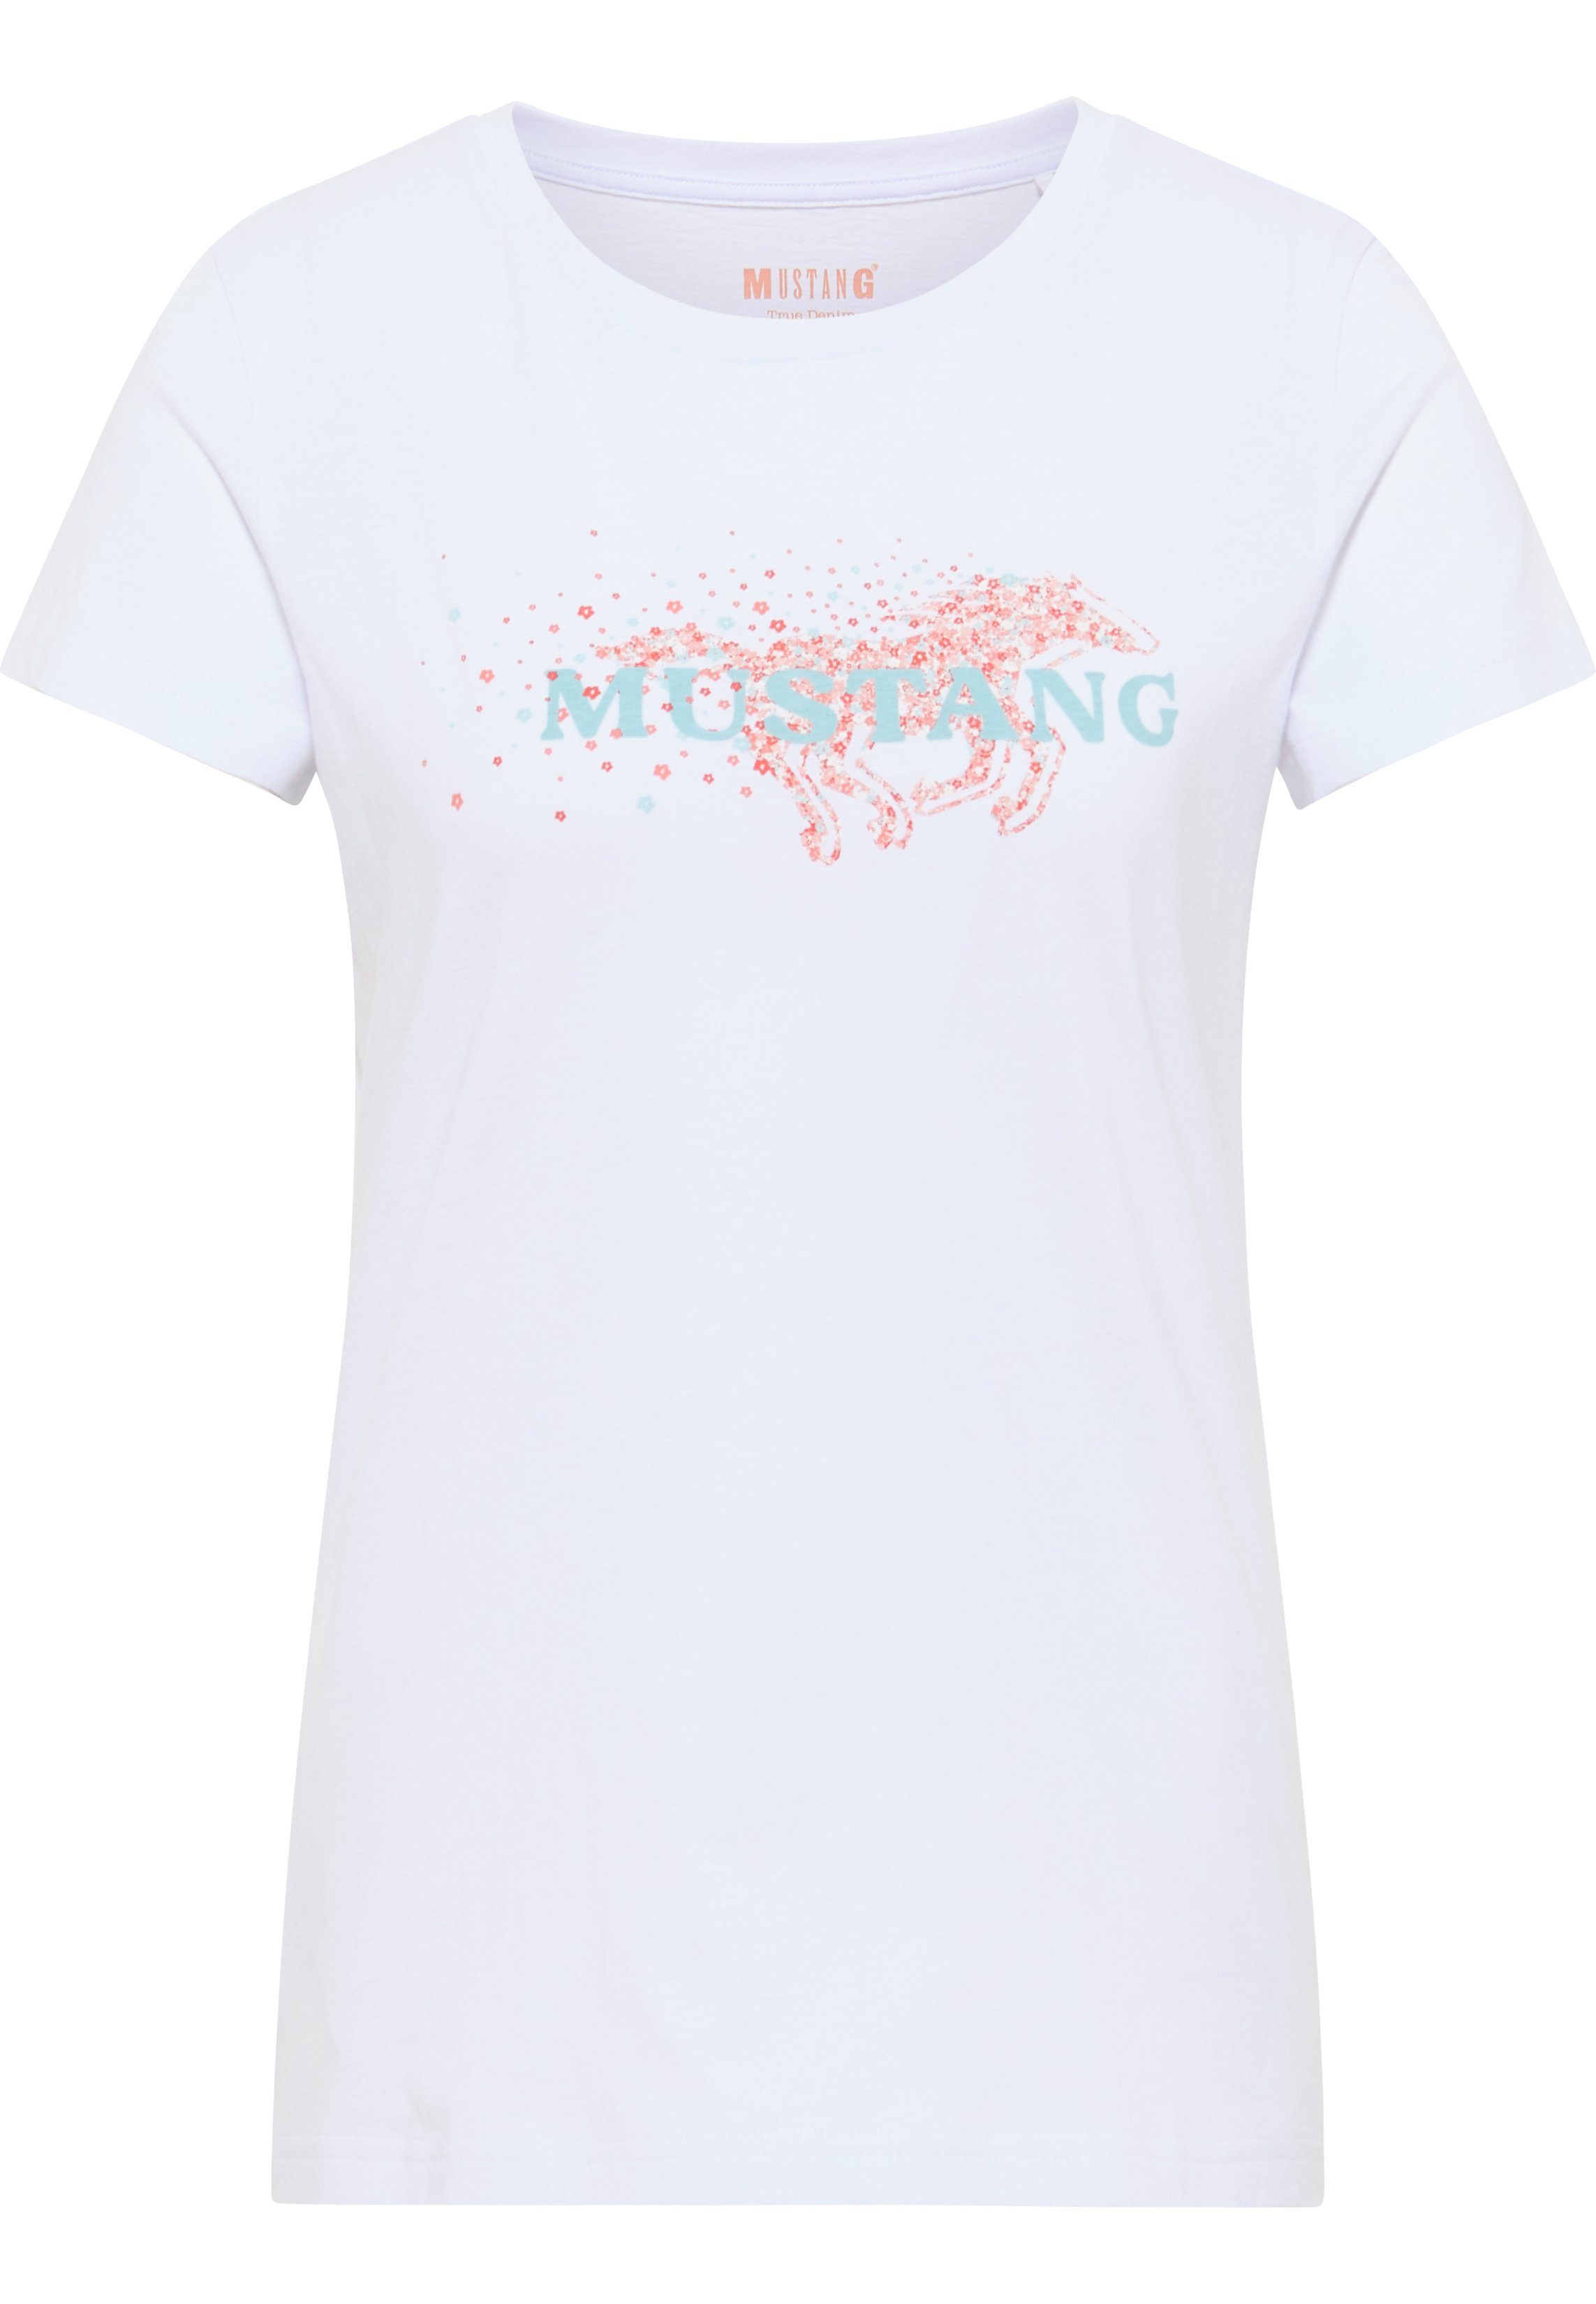 MUSTANG C T-Shirt weiß Print Alexia